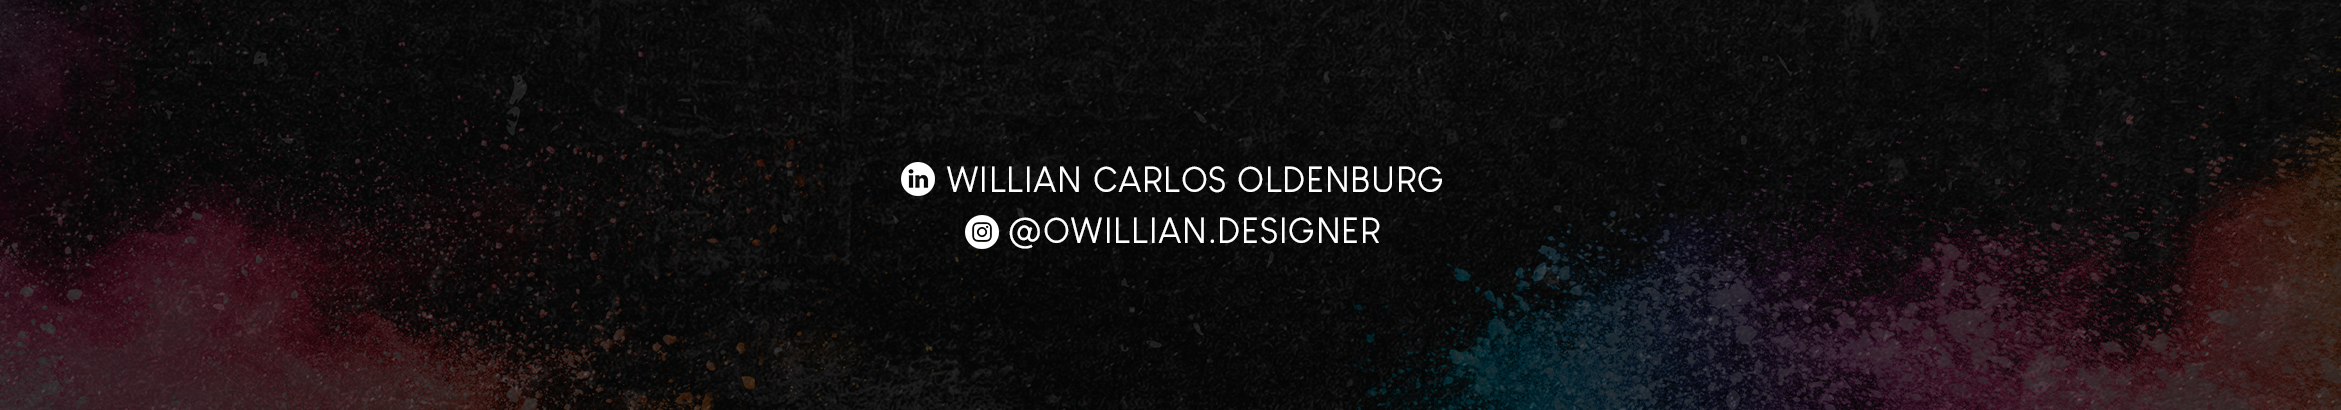 Willian Carlos Oldenburg のプロファイルバナー